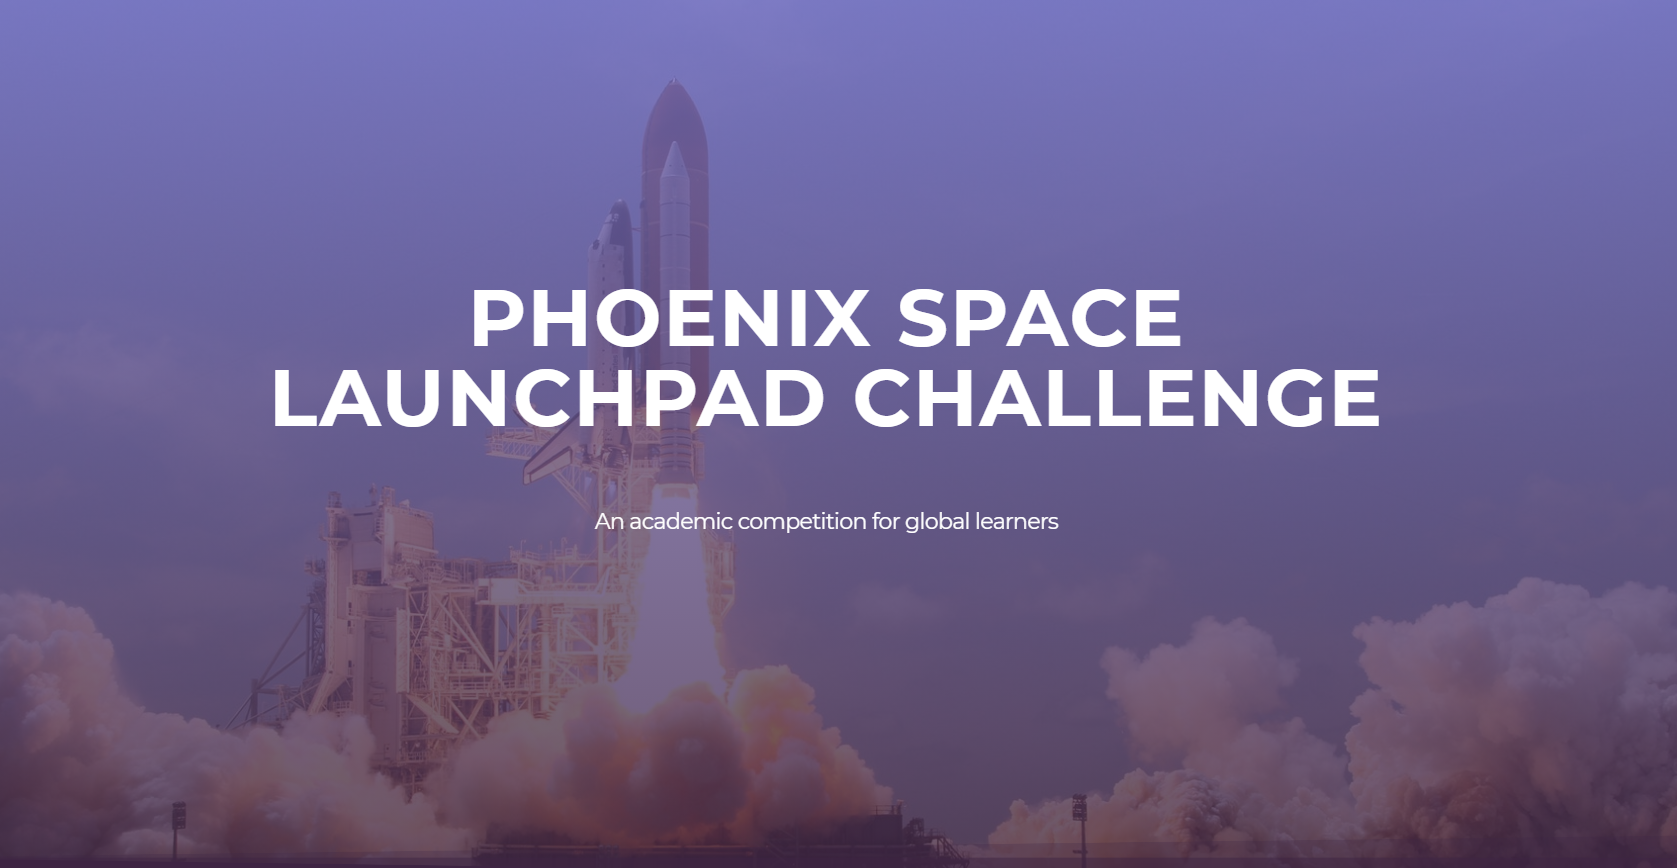 The Phoenix Space LaunchPad Challenge